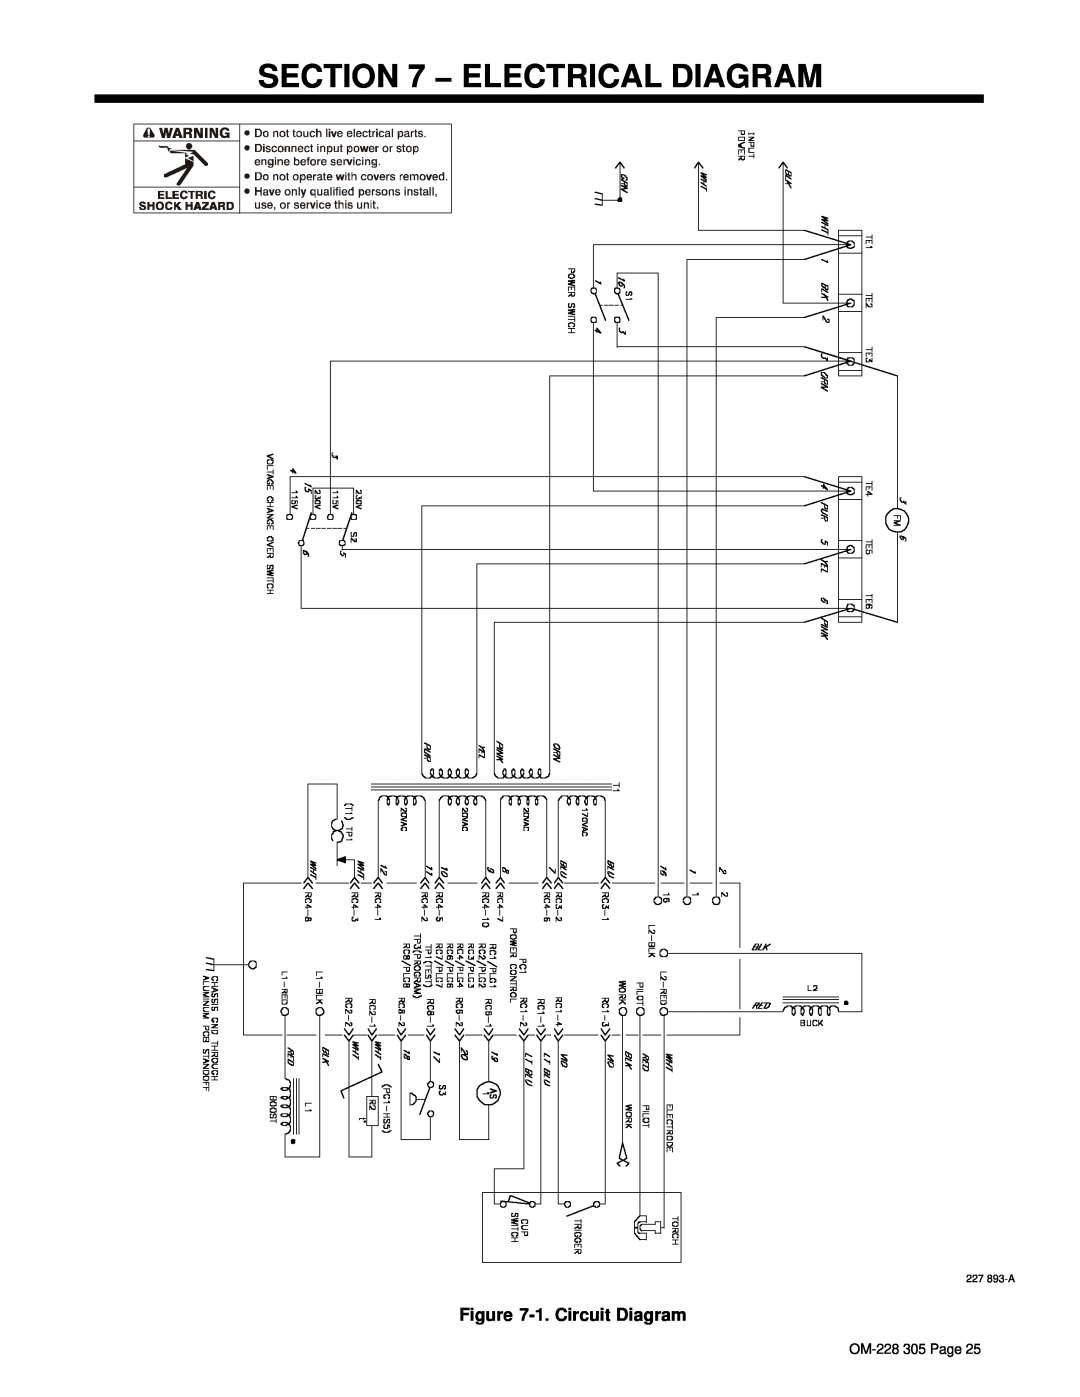 Miller Electric pmn warranty Electrical Diagram, 1. Circuit Diagram 